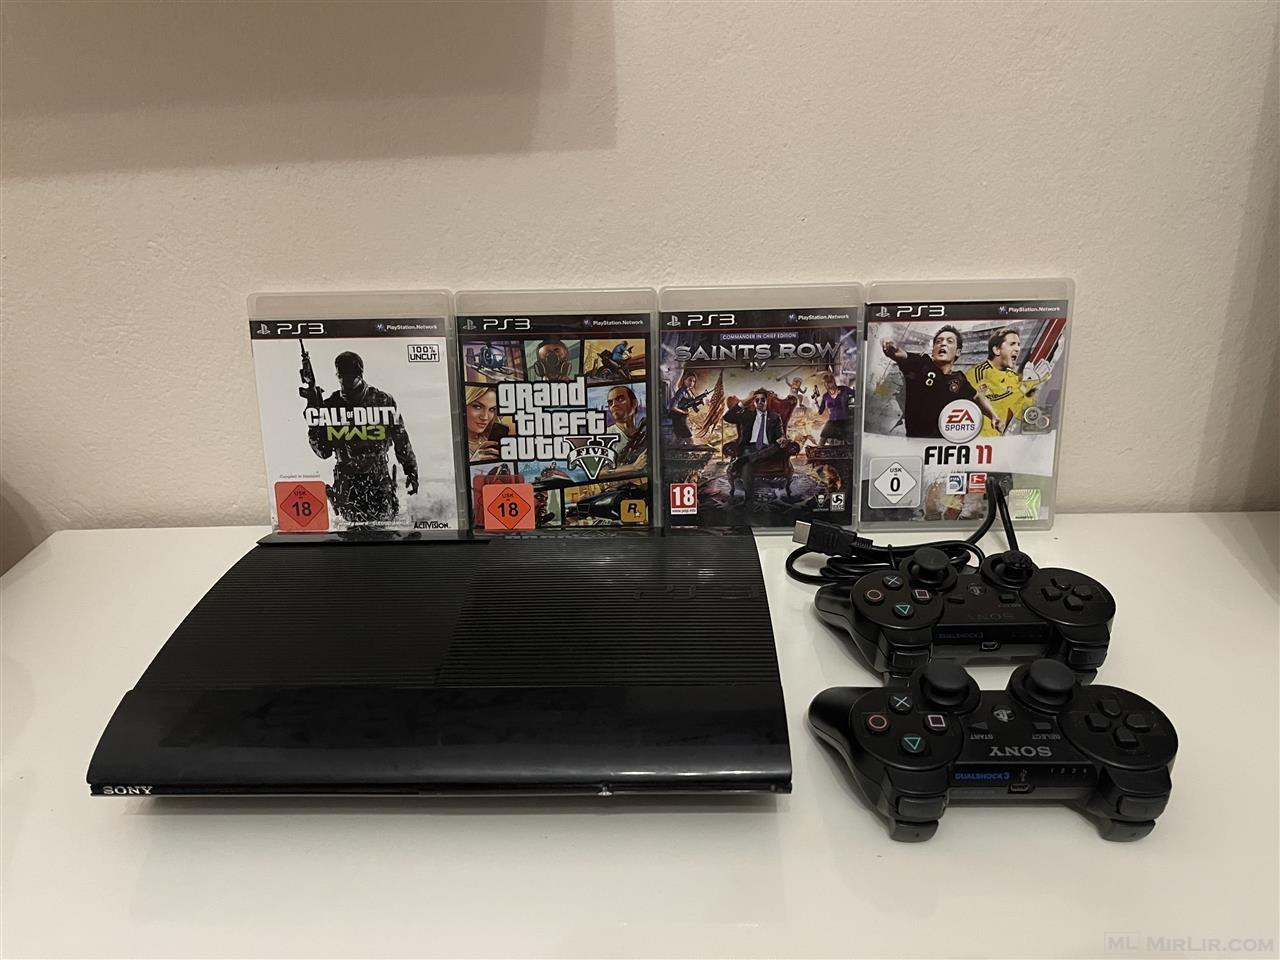 PS3 Super Slim me dy leva dhe GTA 5 plus lojra tjera 